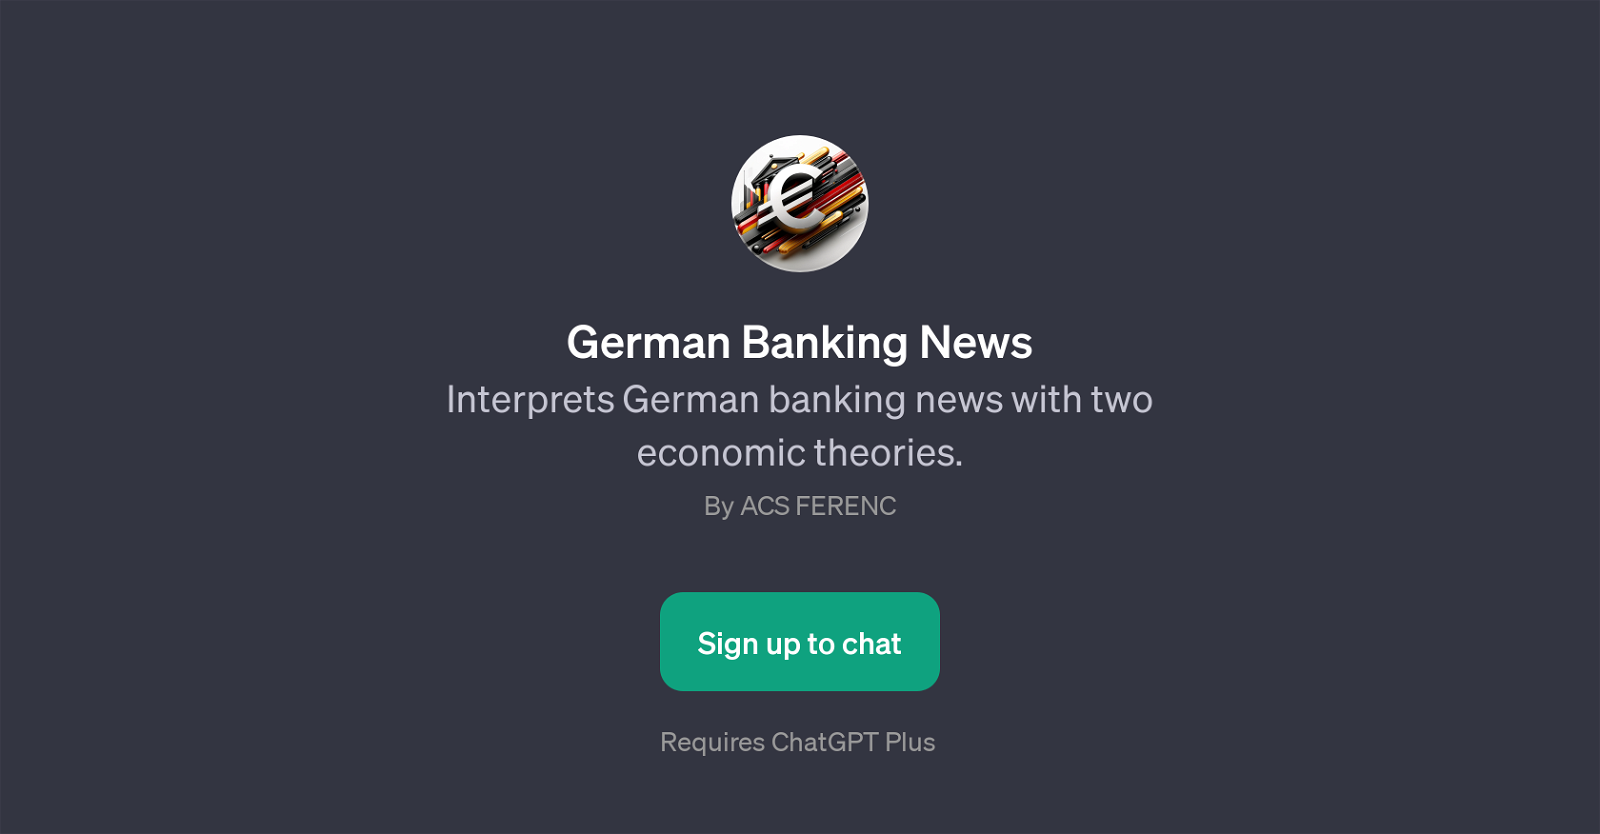 German Banking News website